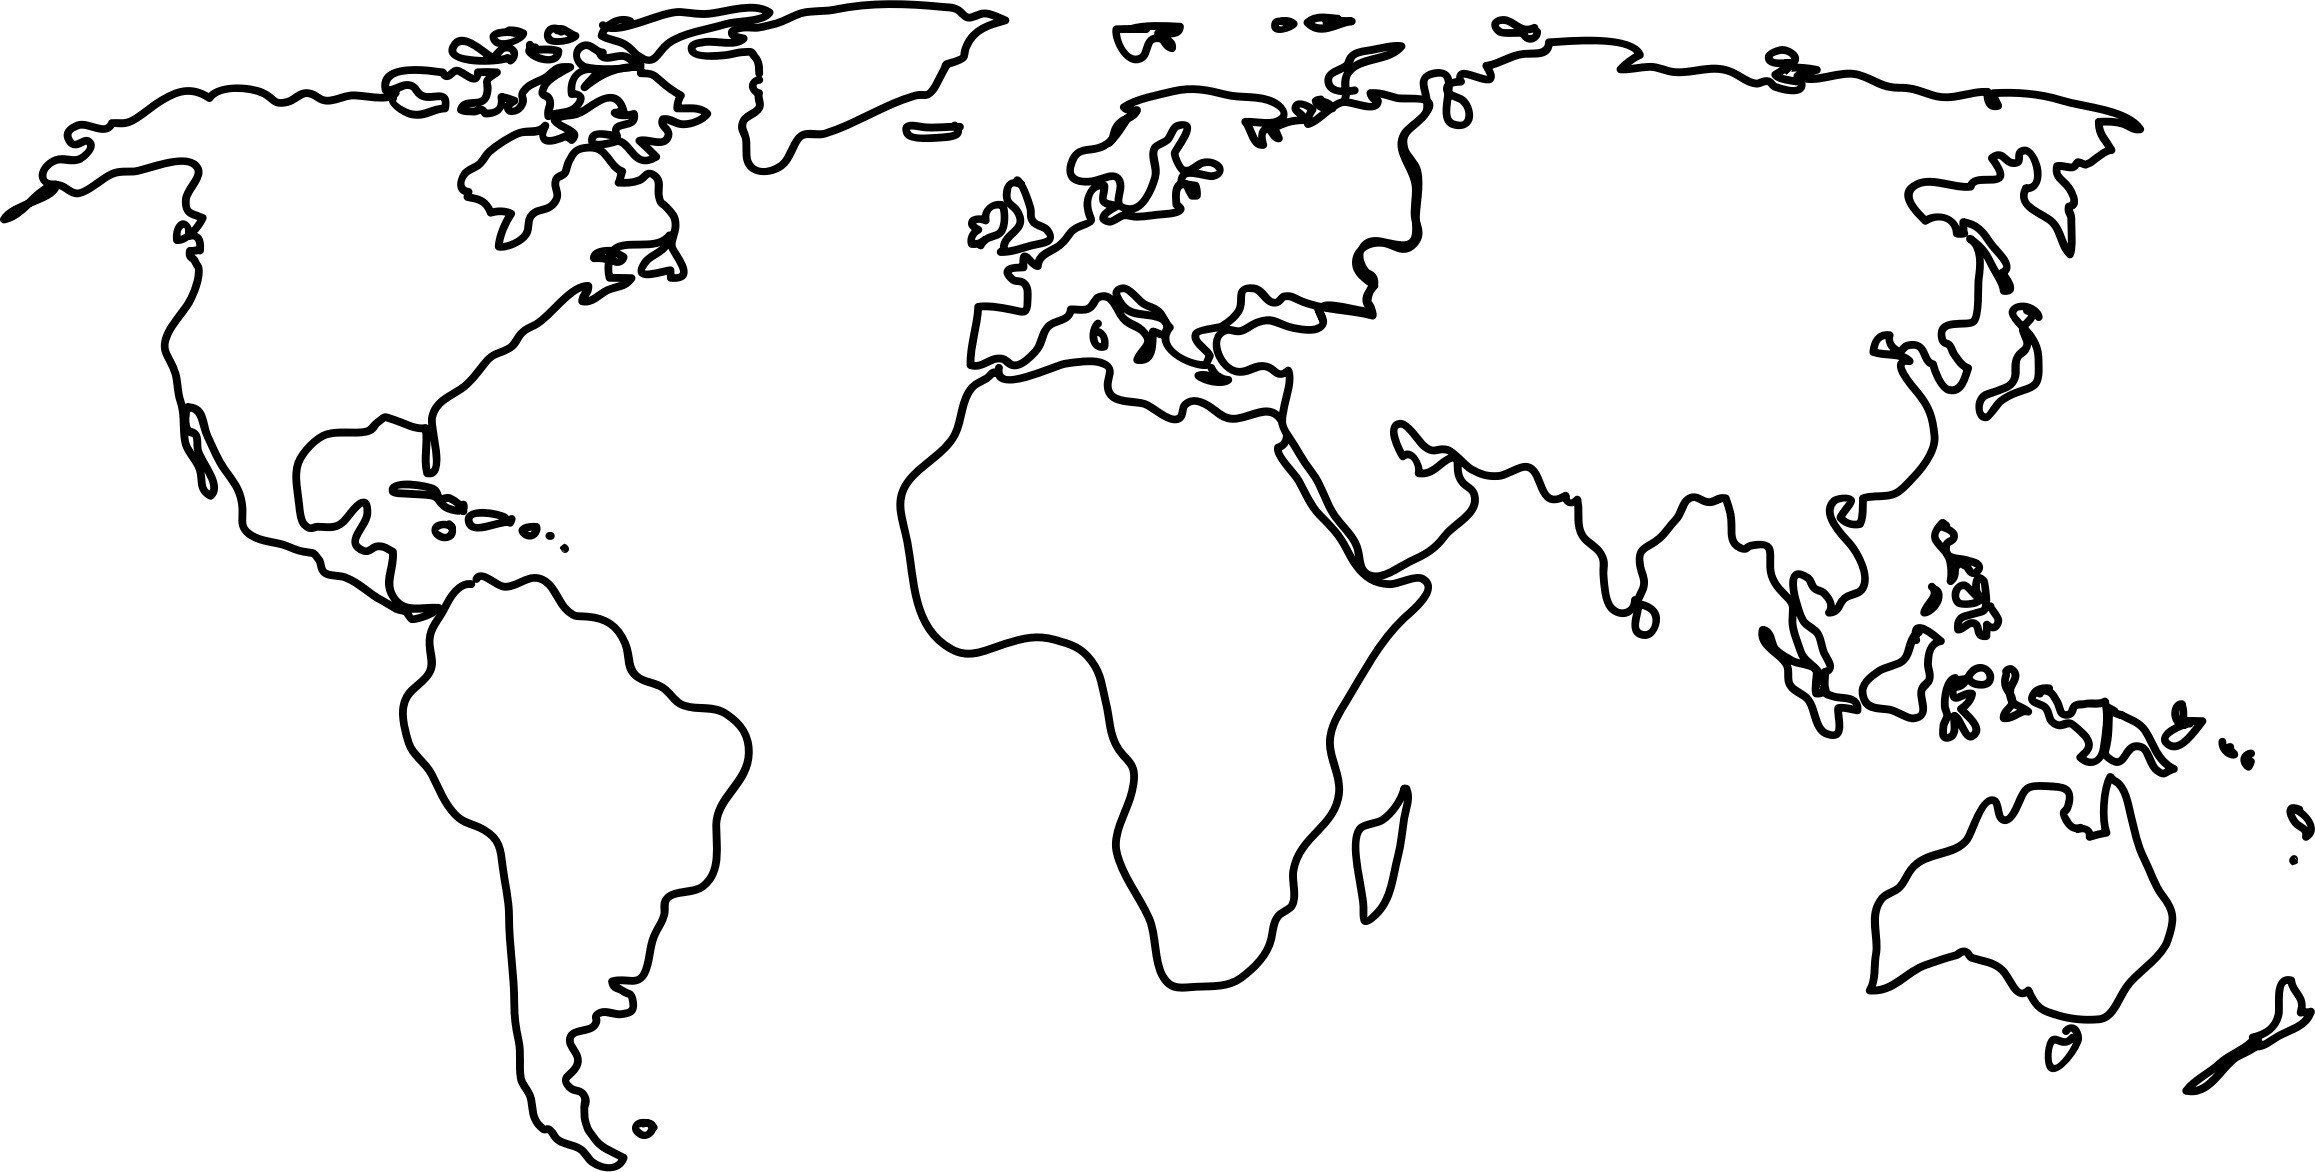 World map world.